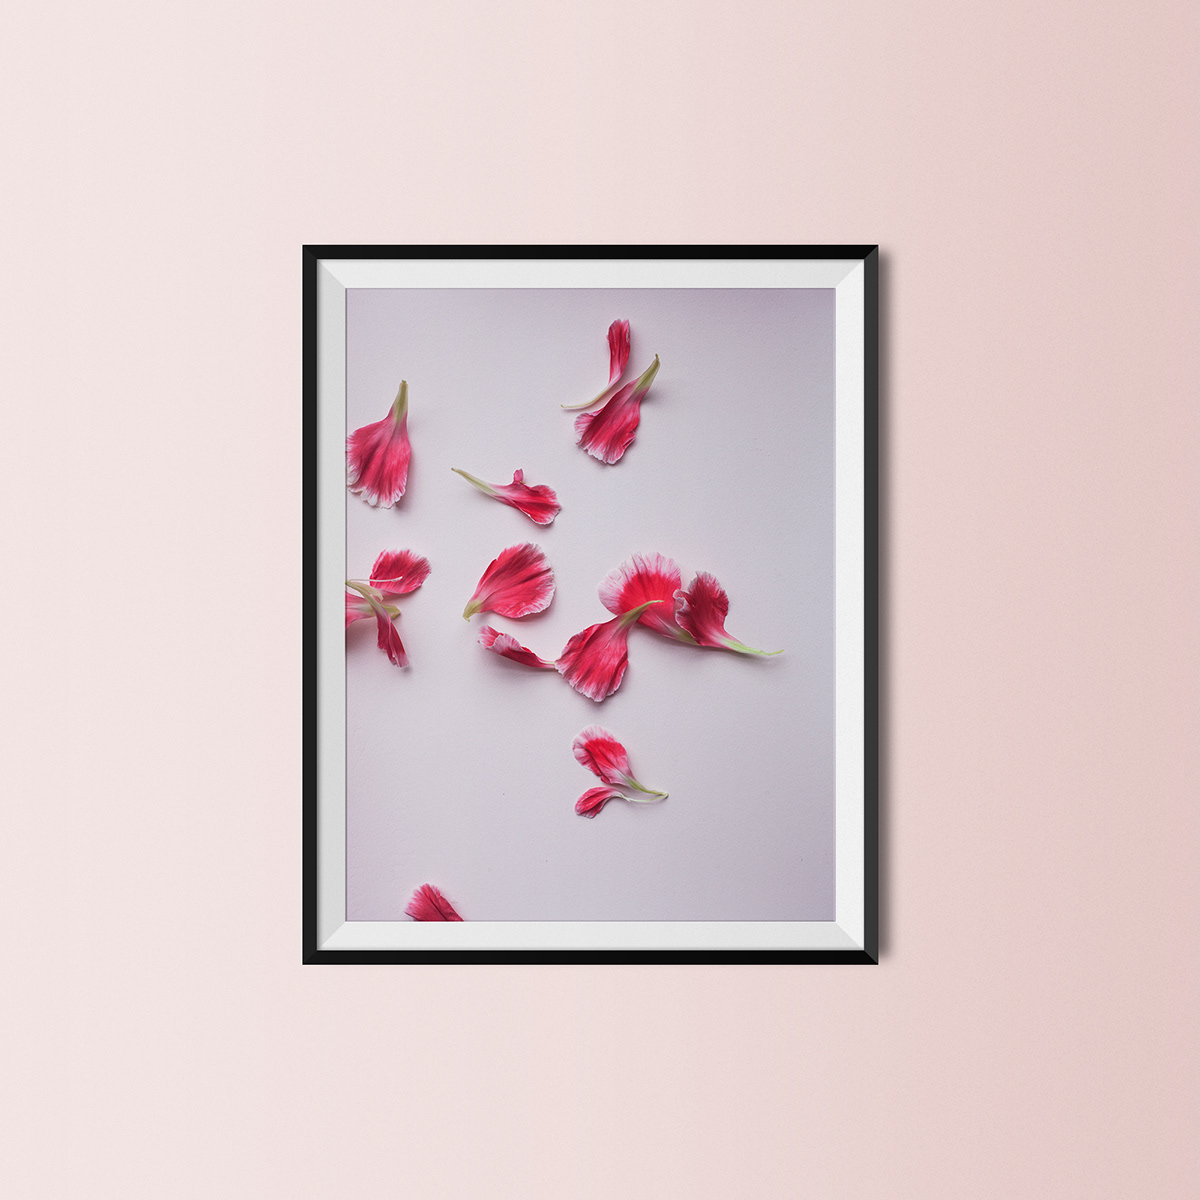 anima Jung Flowers pink femininity identity creative soul petals Expression sensitivity emotion mixed media